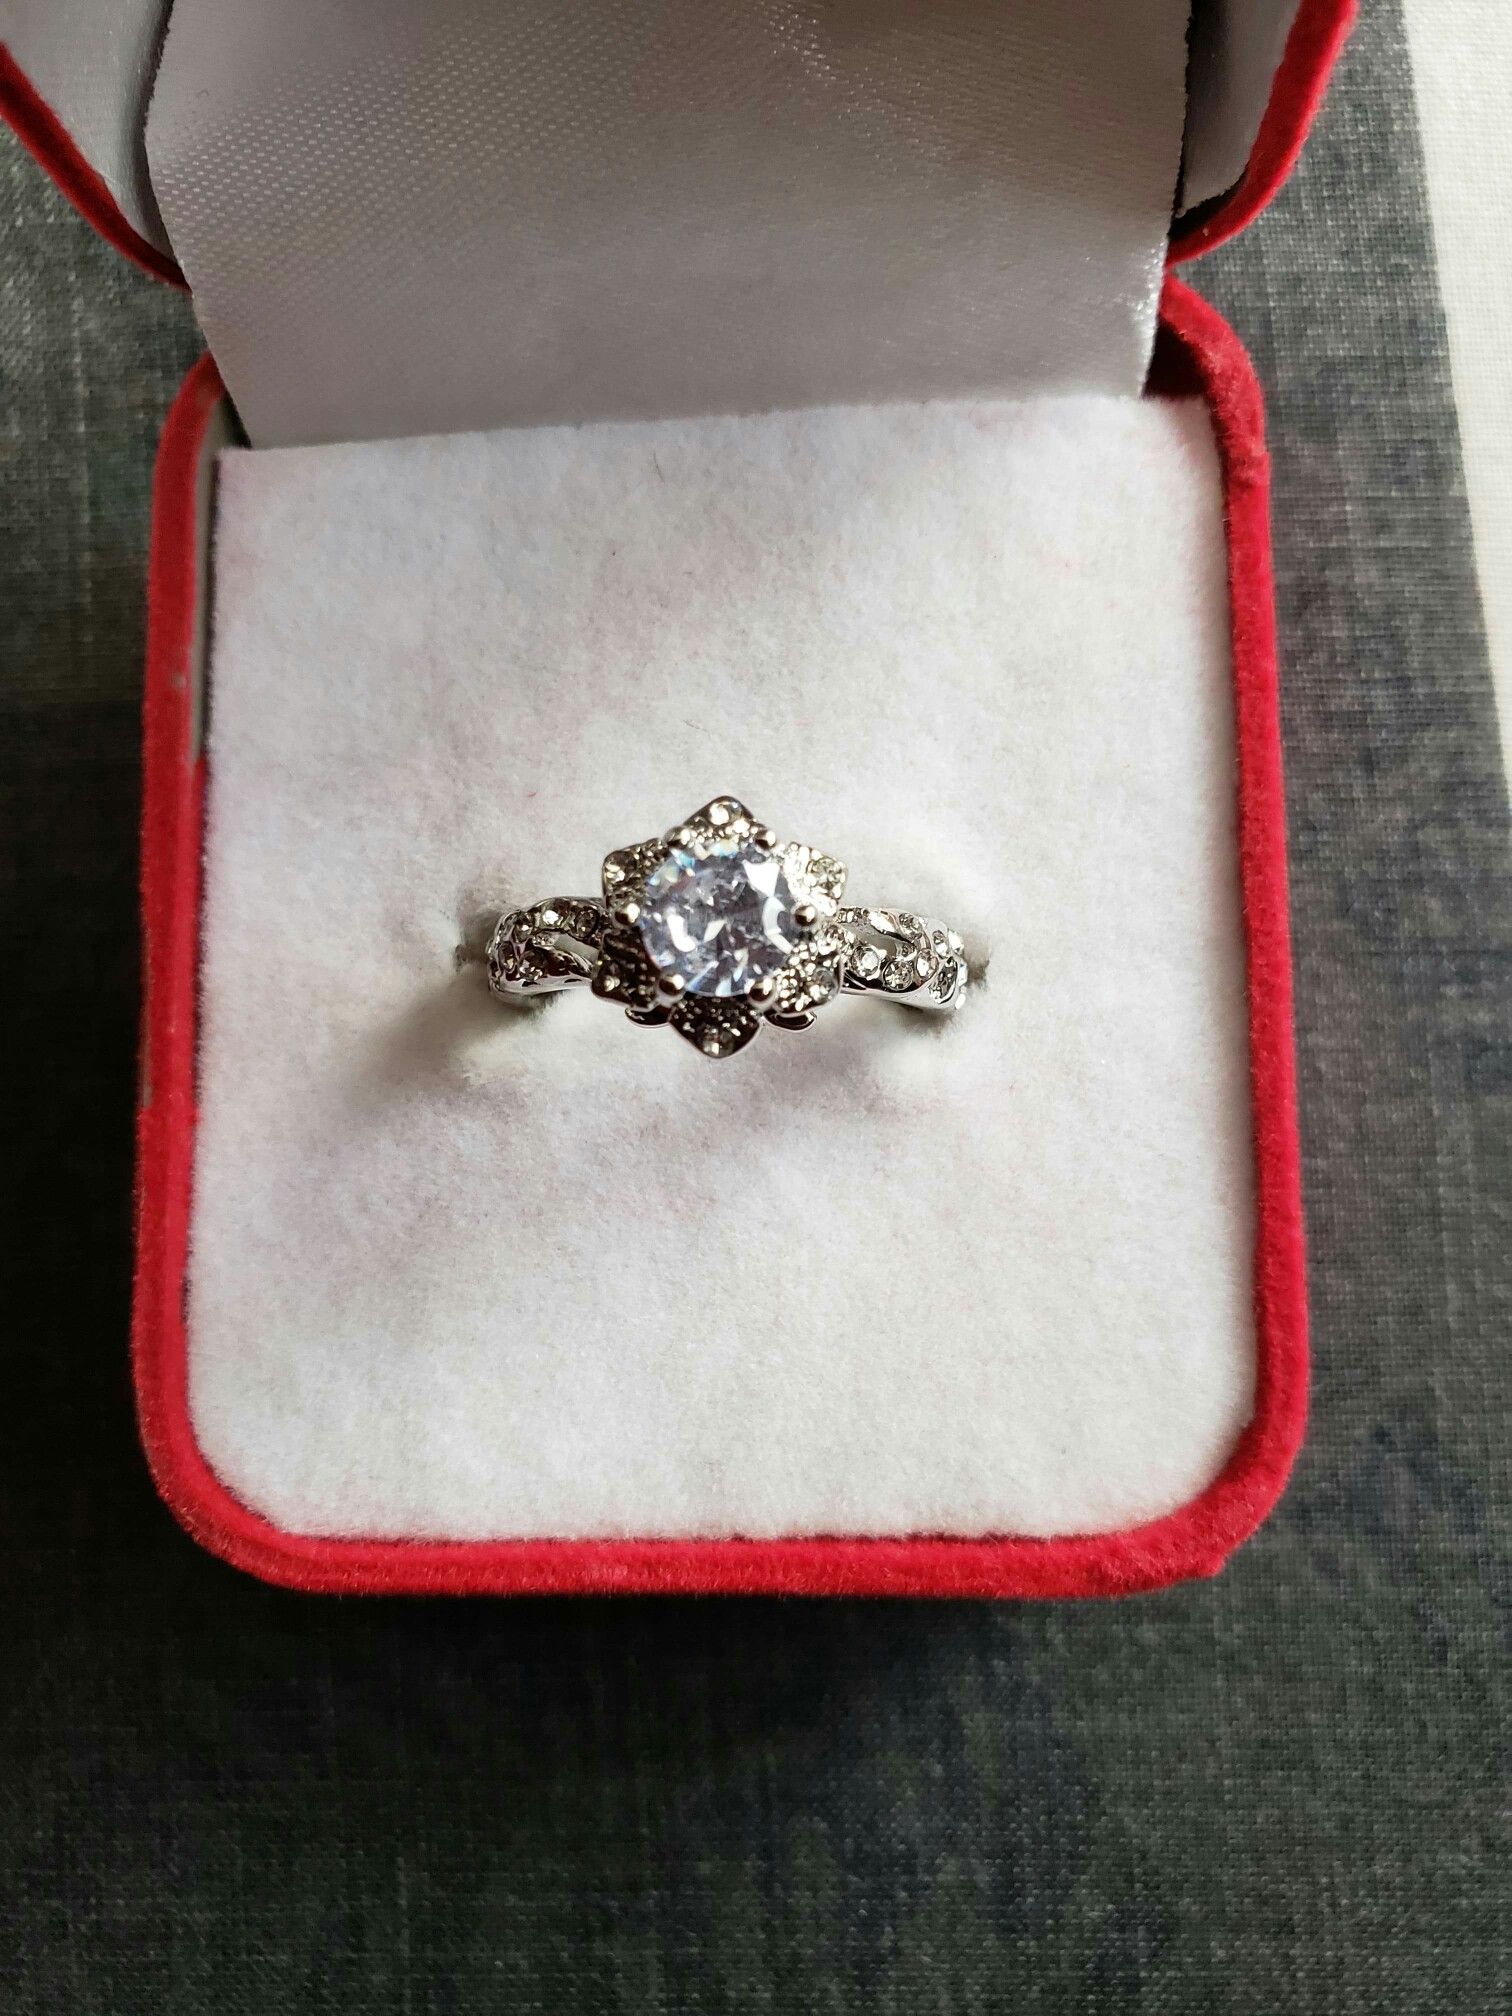 Exquisite white Sapphir diamond rings women 925 silver Gemstone bridal wedding jewelry Anniversary gift Rings size 8